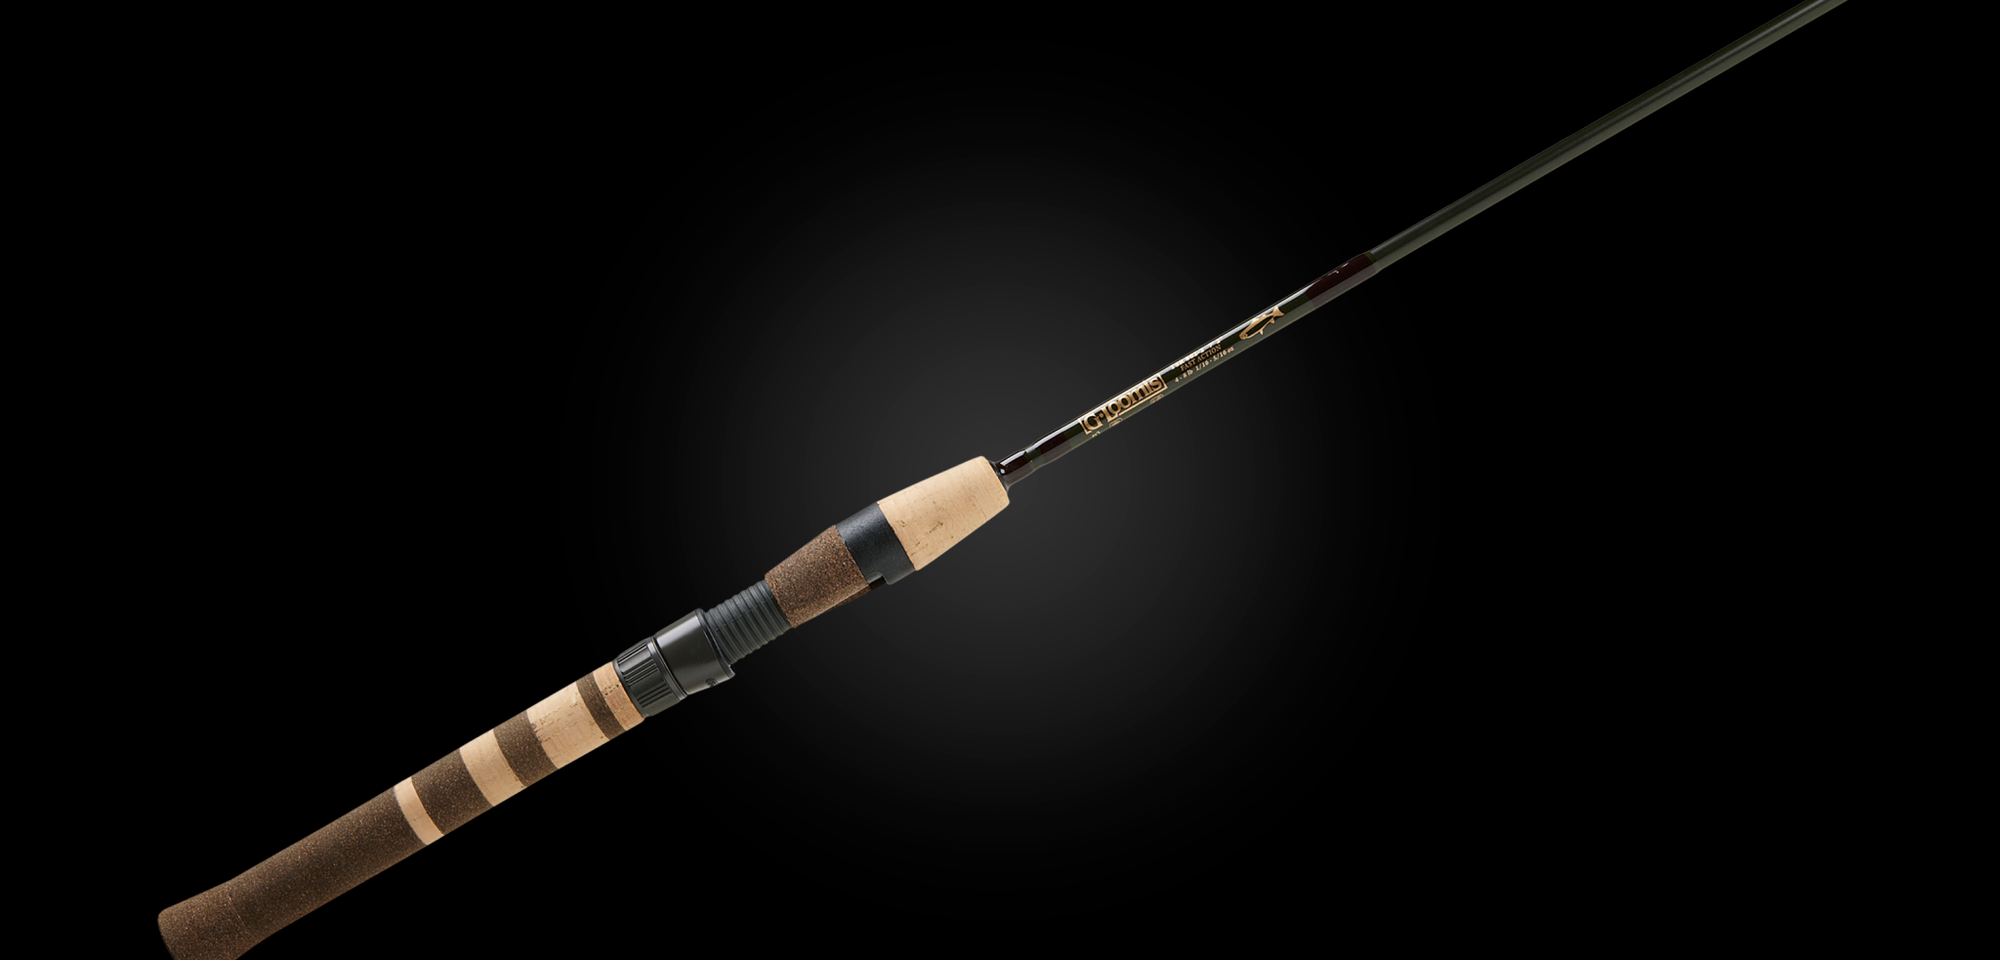  G Loomis NRX SALMON STEELHEAD 10' FLY FISHING ROD 12033-01 :  Sports & Outdoors